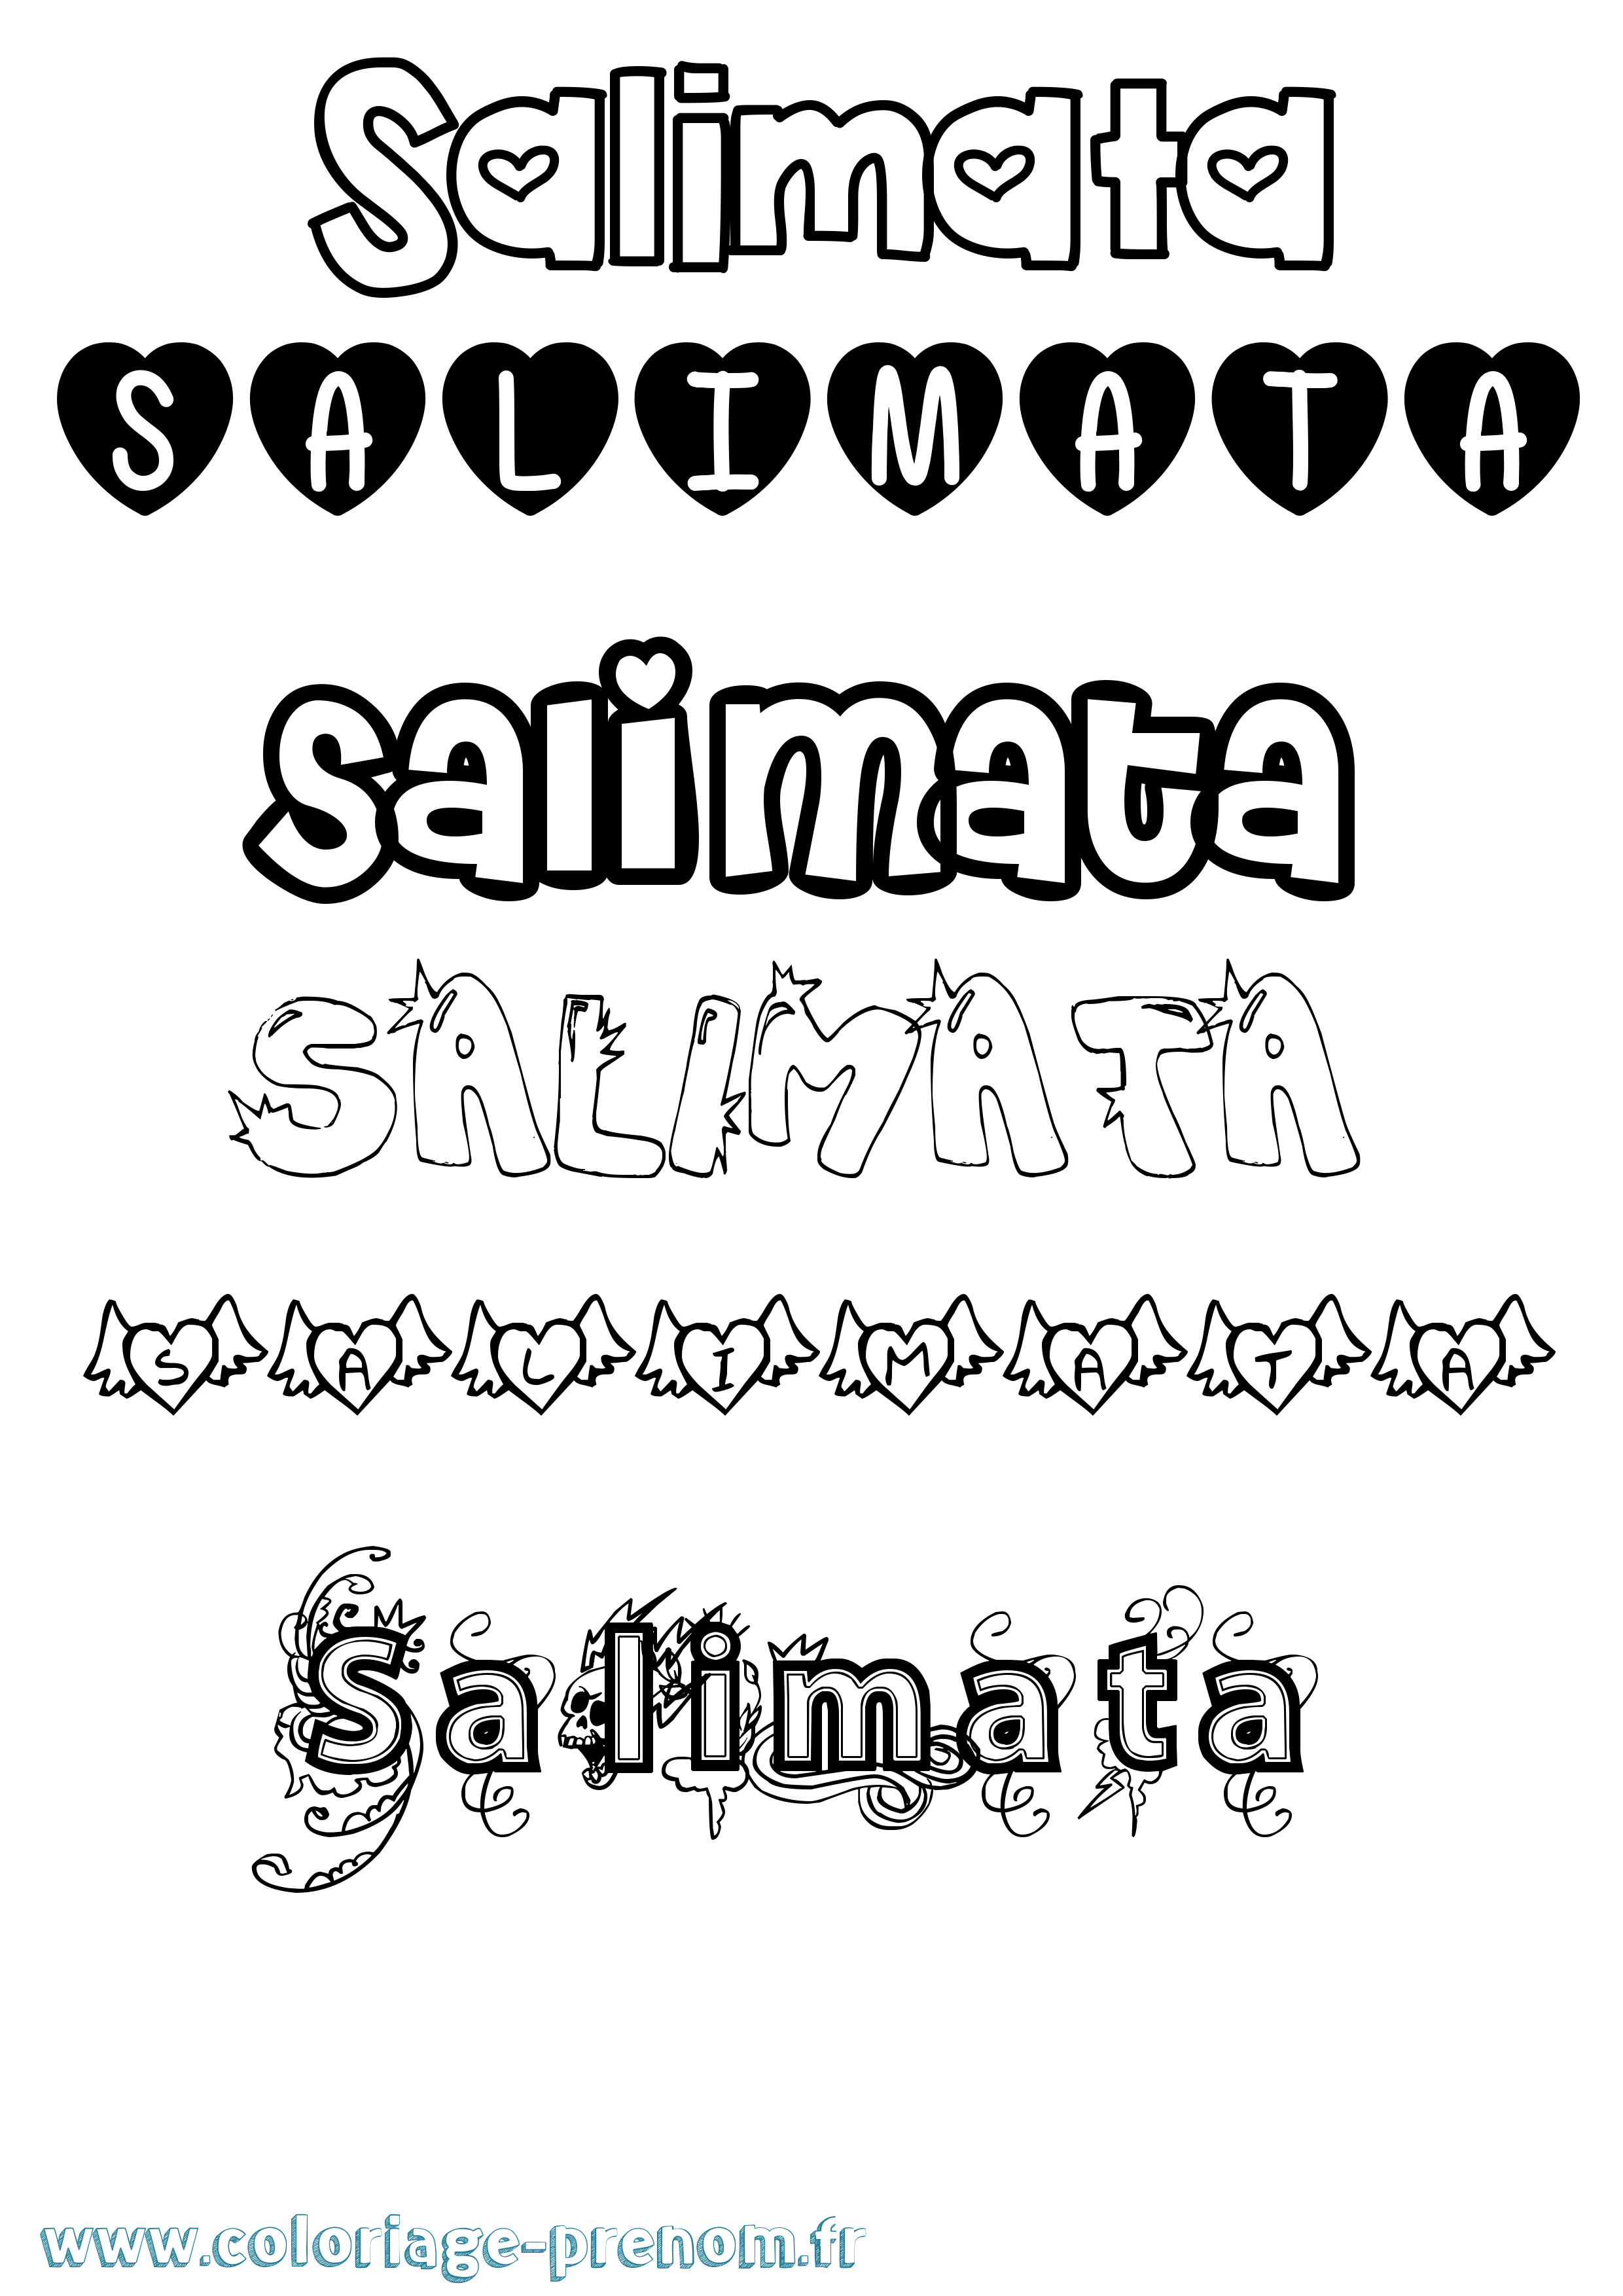 Coloriage prénom Salimata